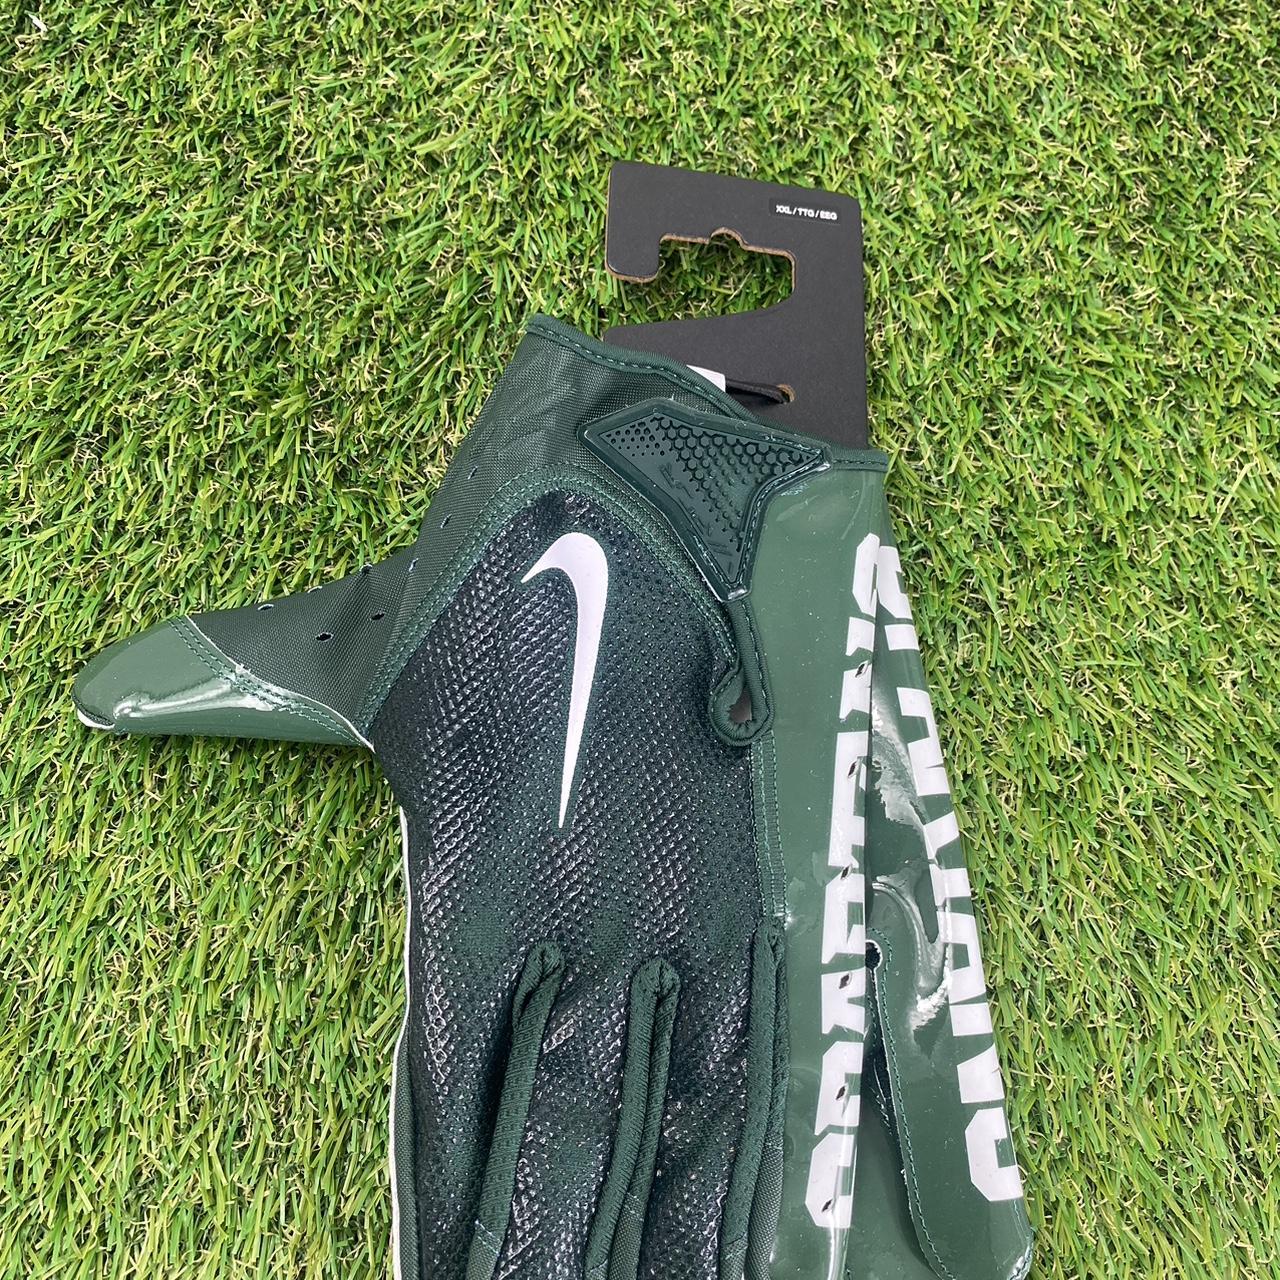 Supreme x Nike vapormax football gloves size M - Depop